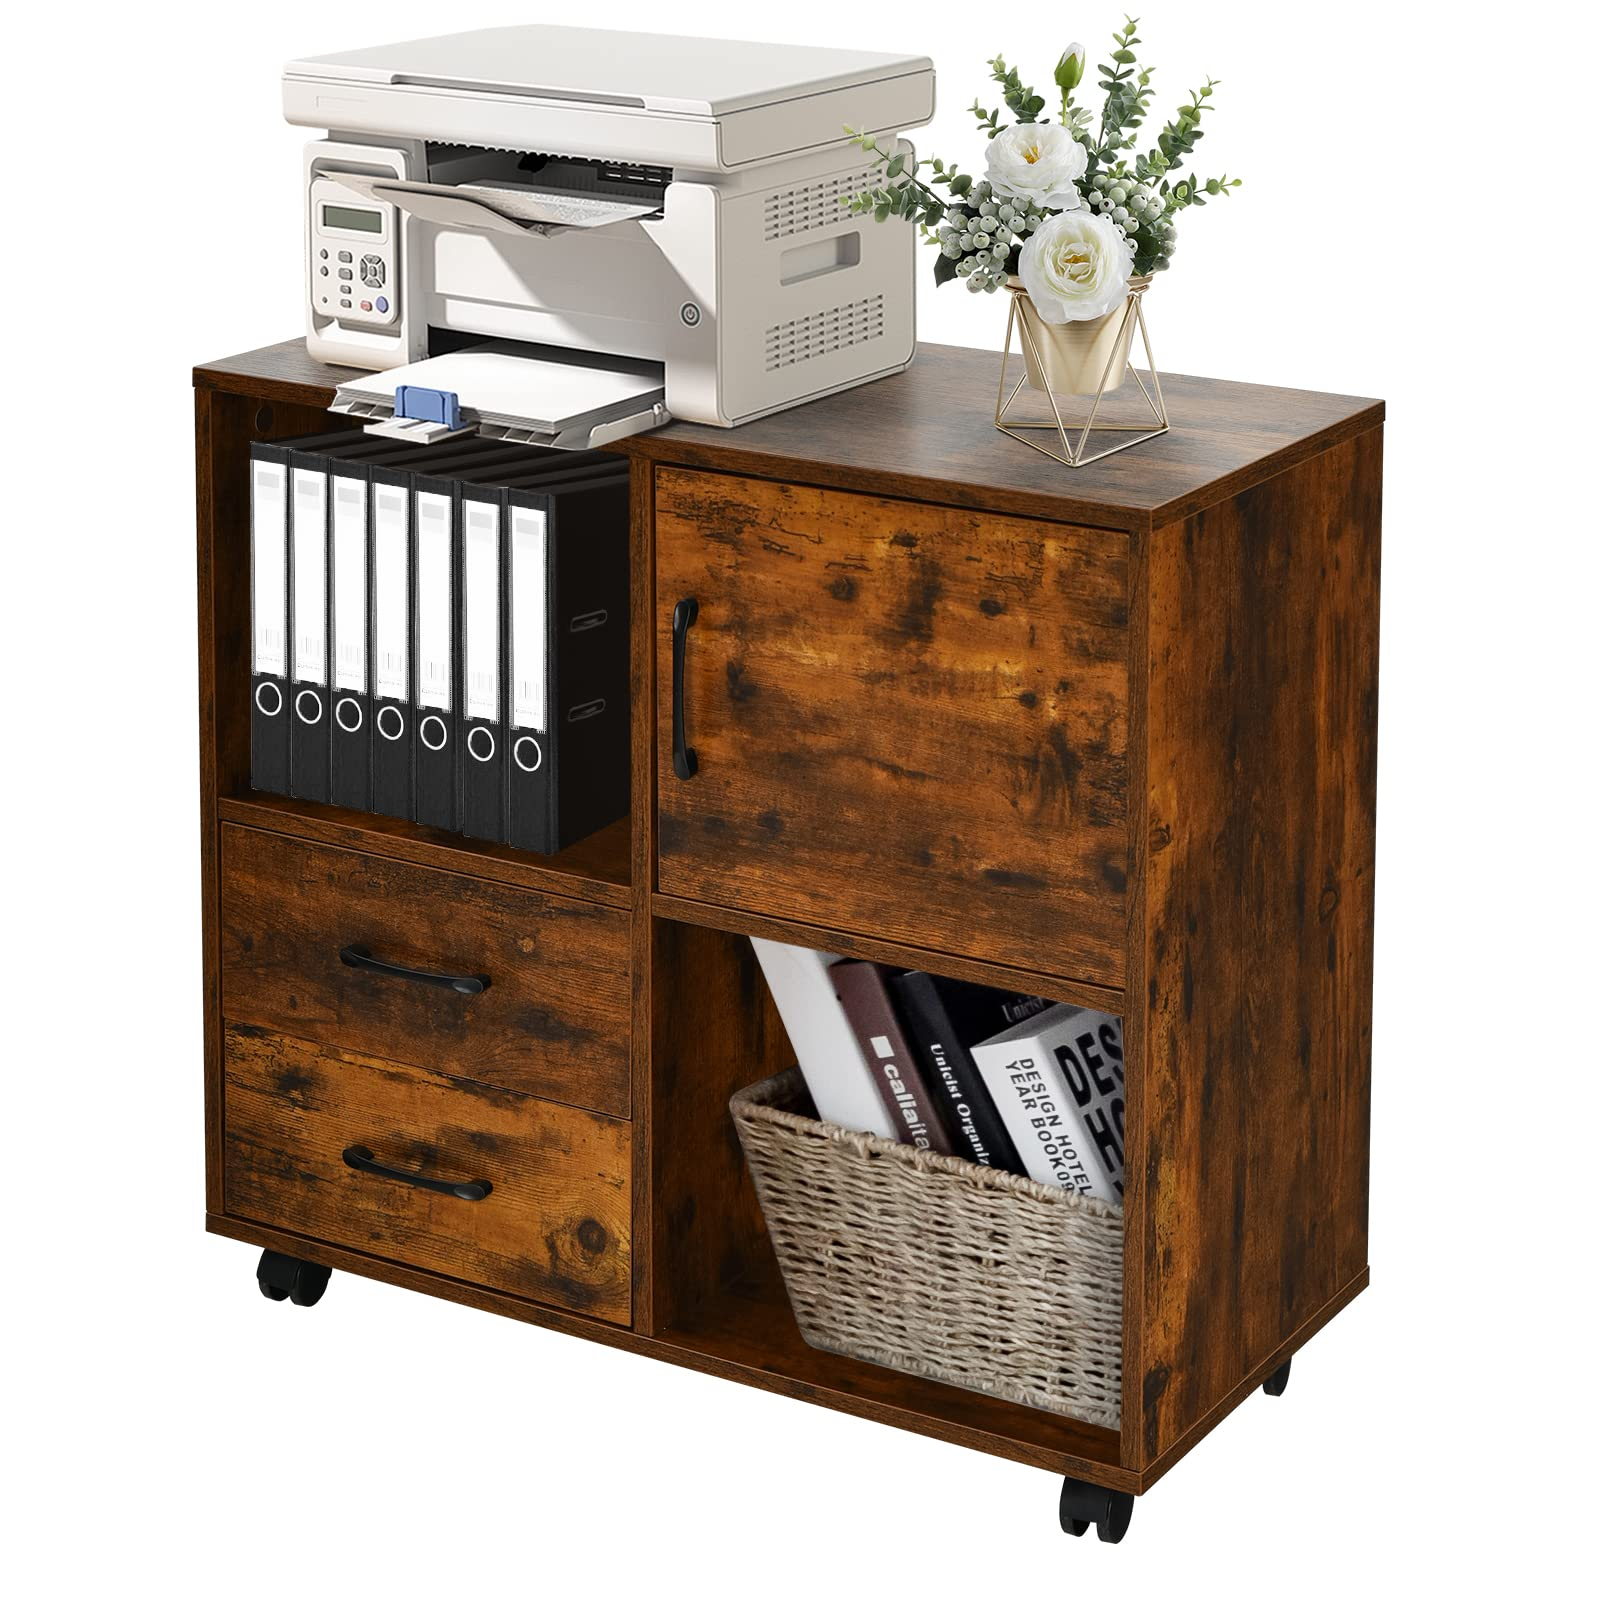 Giantex Printer Stand Under Desk - Mobile File Cabinet